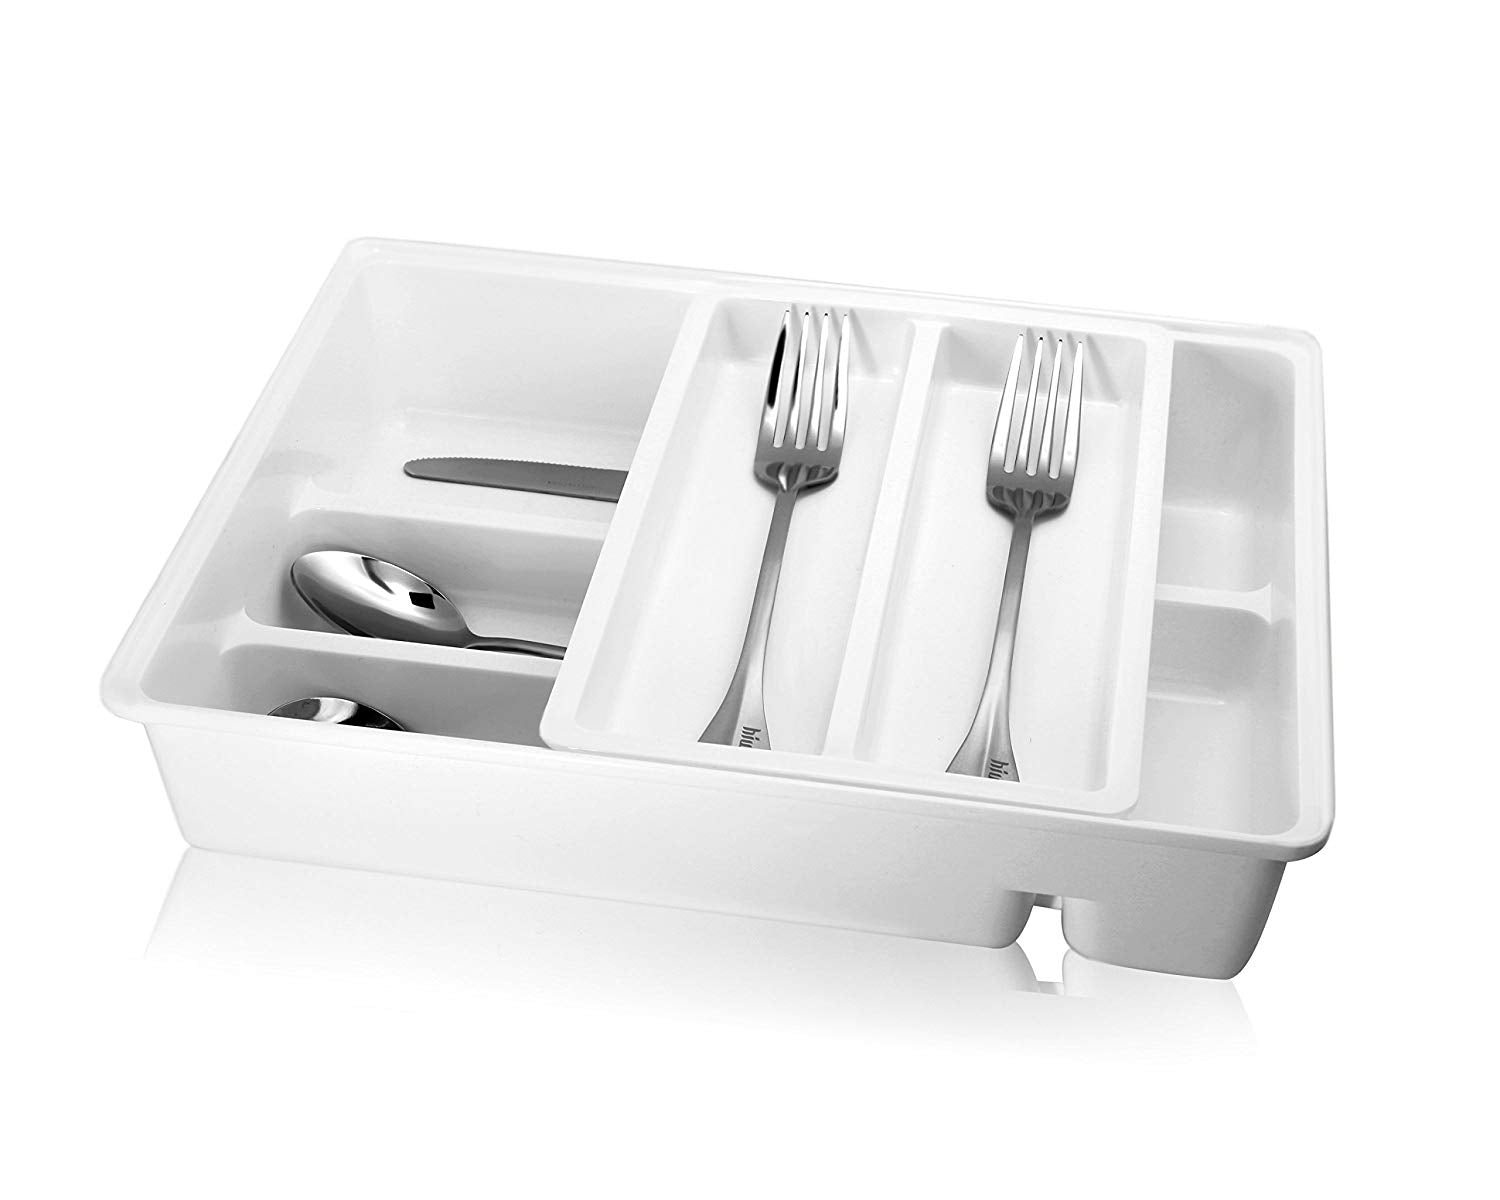 Hiware Double Tiered Cutlery Tray Drawer Insert, Plastic Utensil Organizer, Universal Drawer Organizer